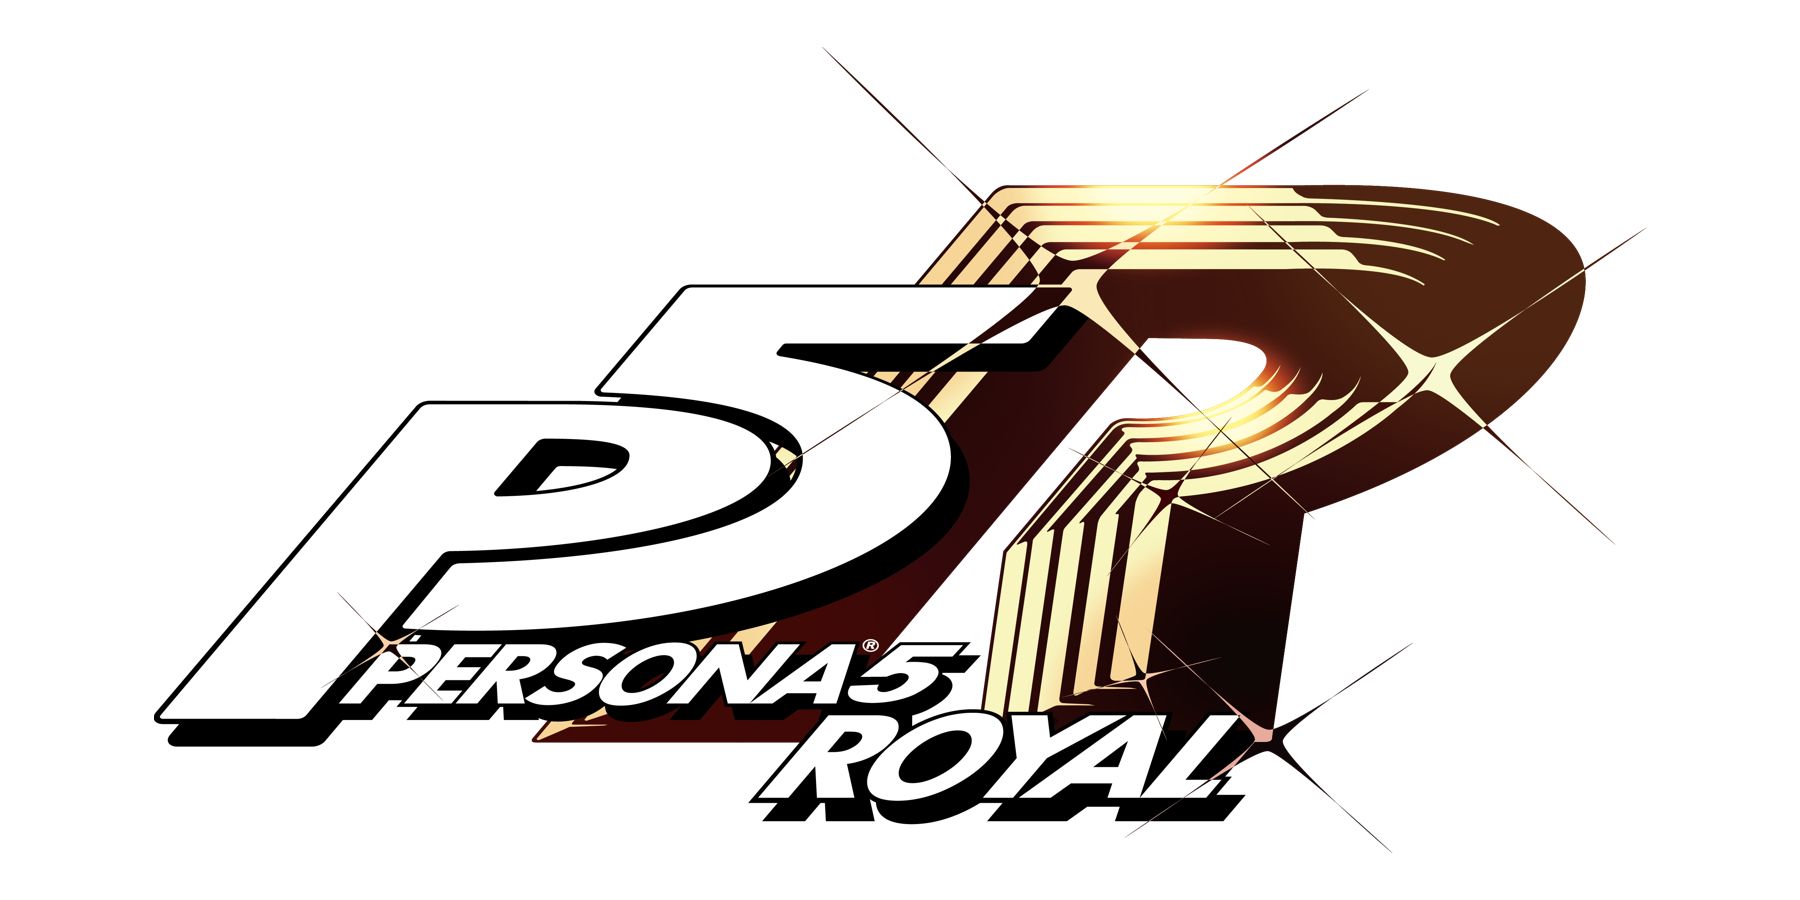 persona 5 royal logo blank background